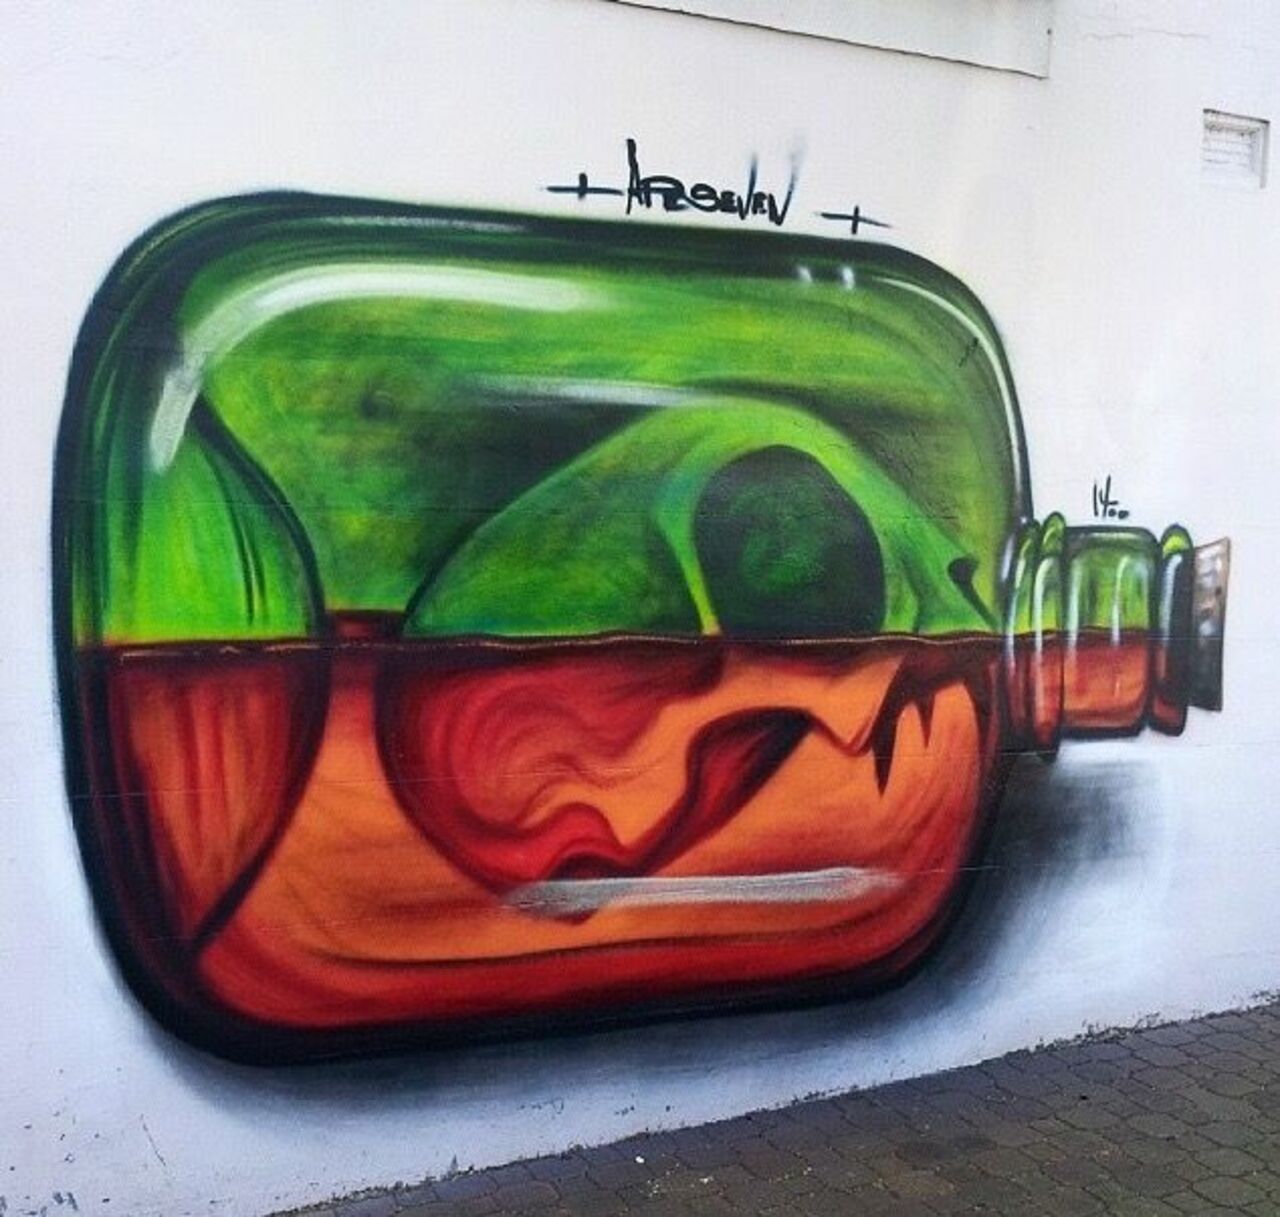 “@StreetArtBuzz: by ApeSeven, Sydney, https://twib.in/l/Mp4Ep4g5Go7 #art #urbanart #streetart http://t.co/eRq95Bhvo6”